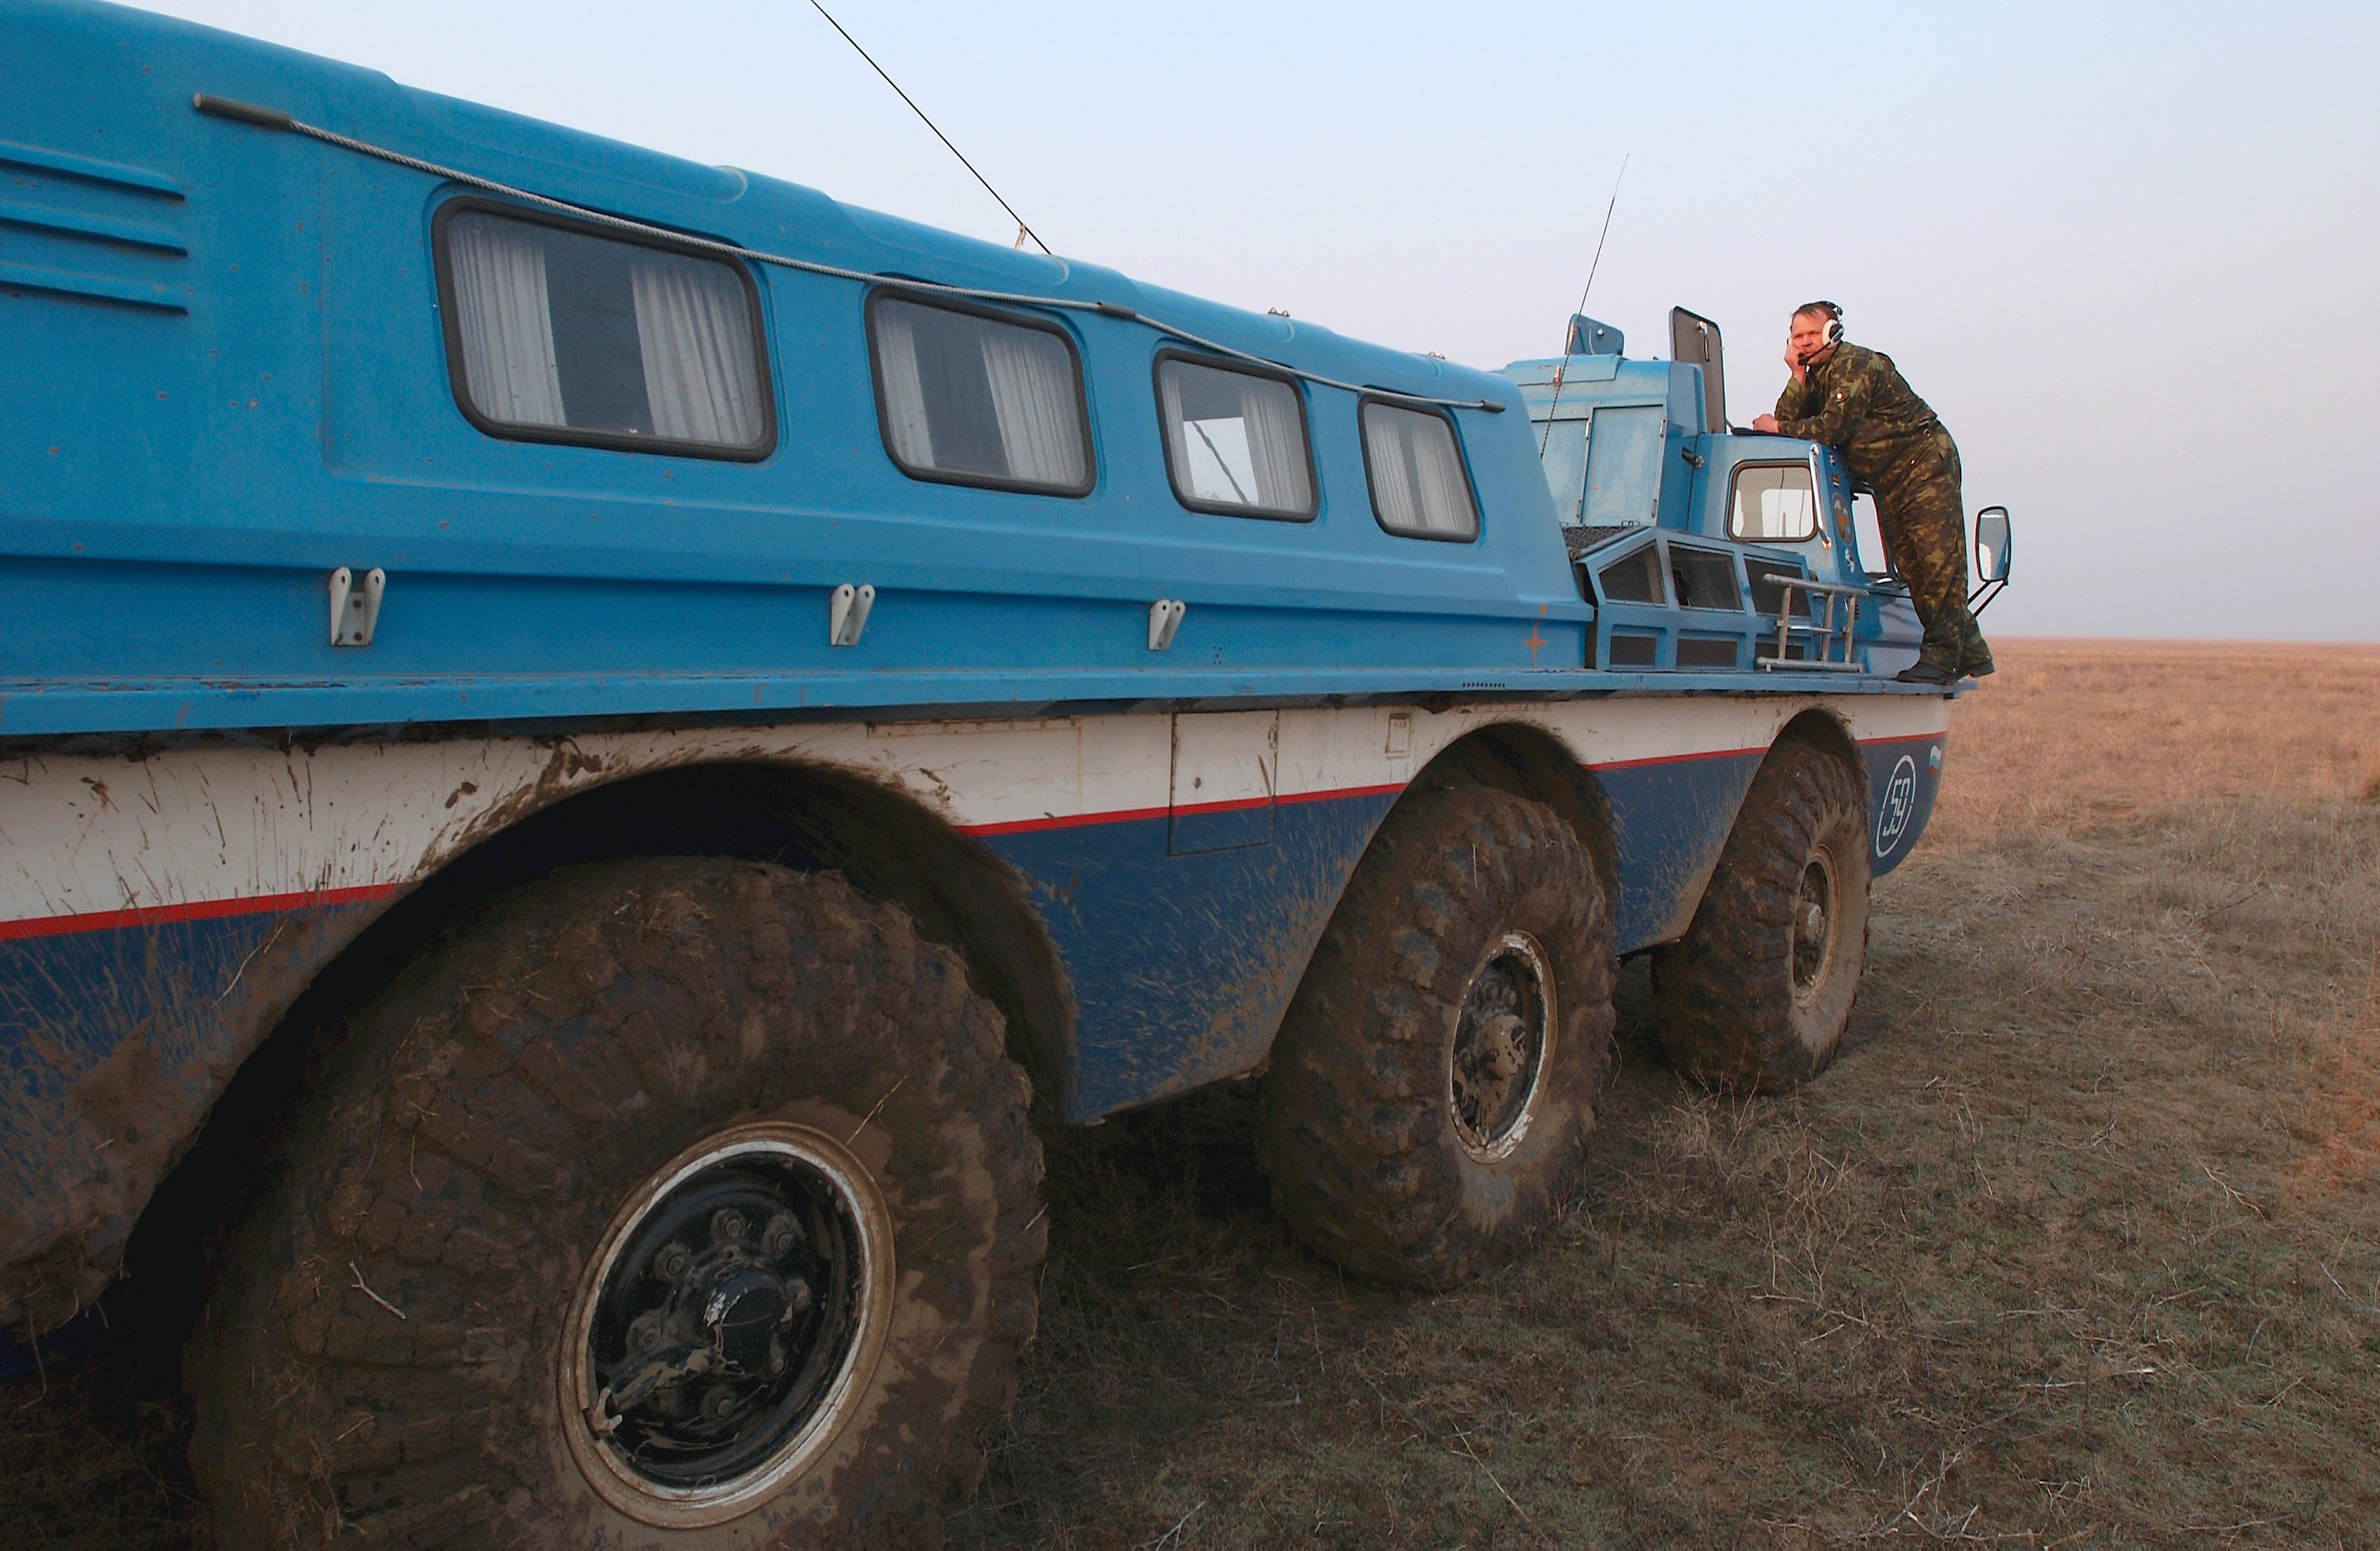 File:Russian-made all-terrain vehicle.jpg - Wikimedia Commons